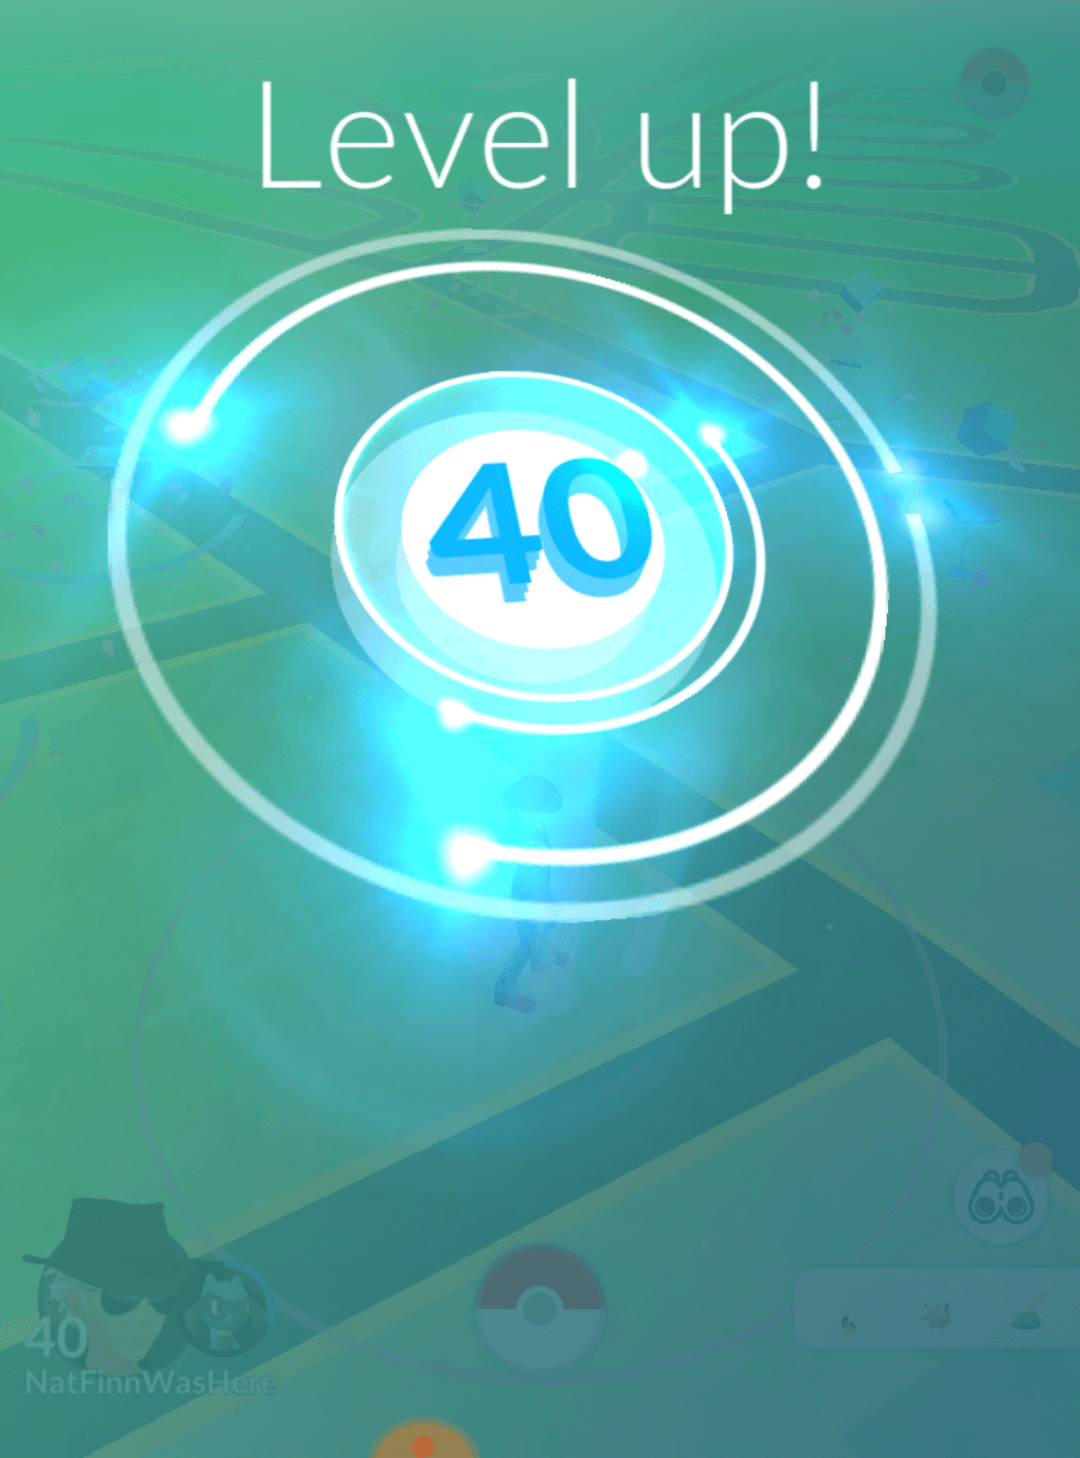 On reaching Level 40 in Pokémon GO